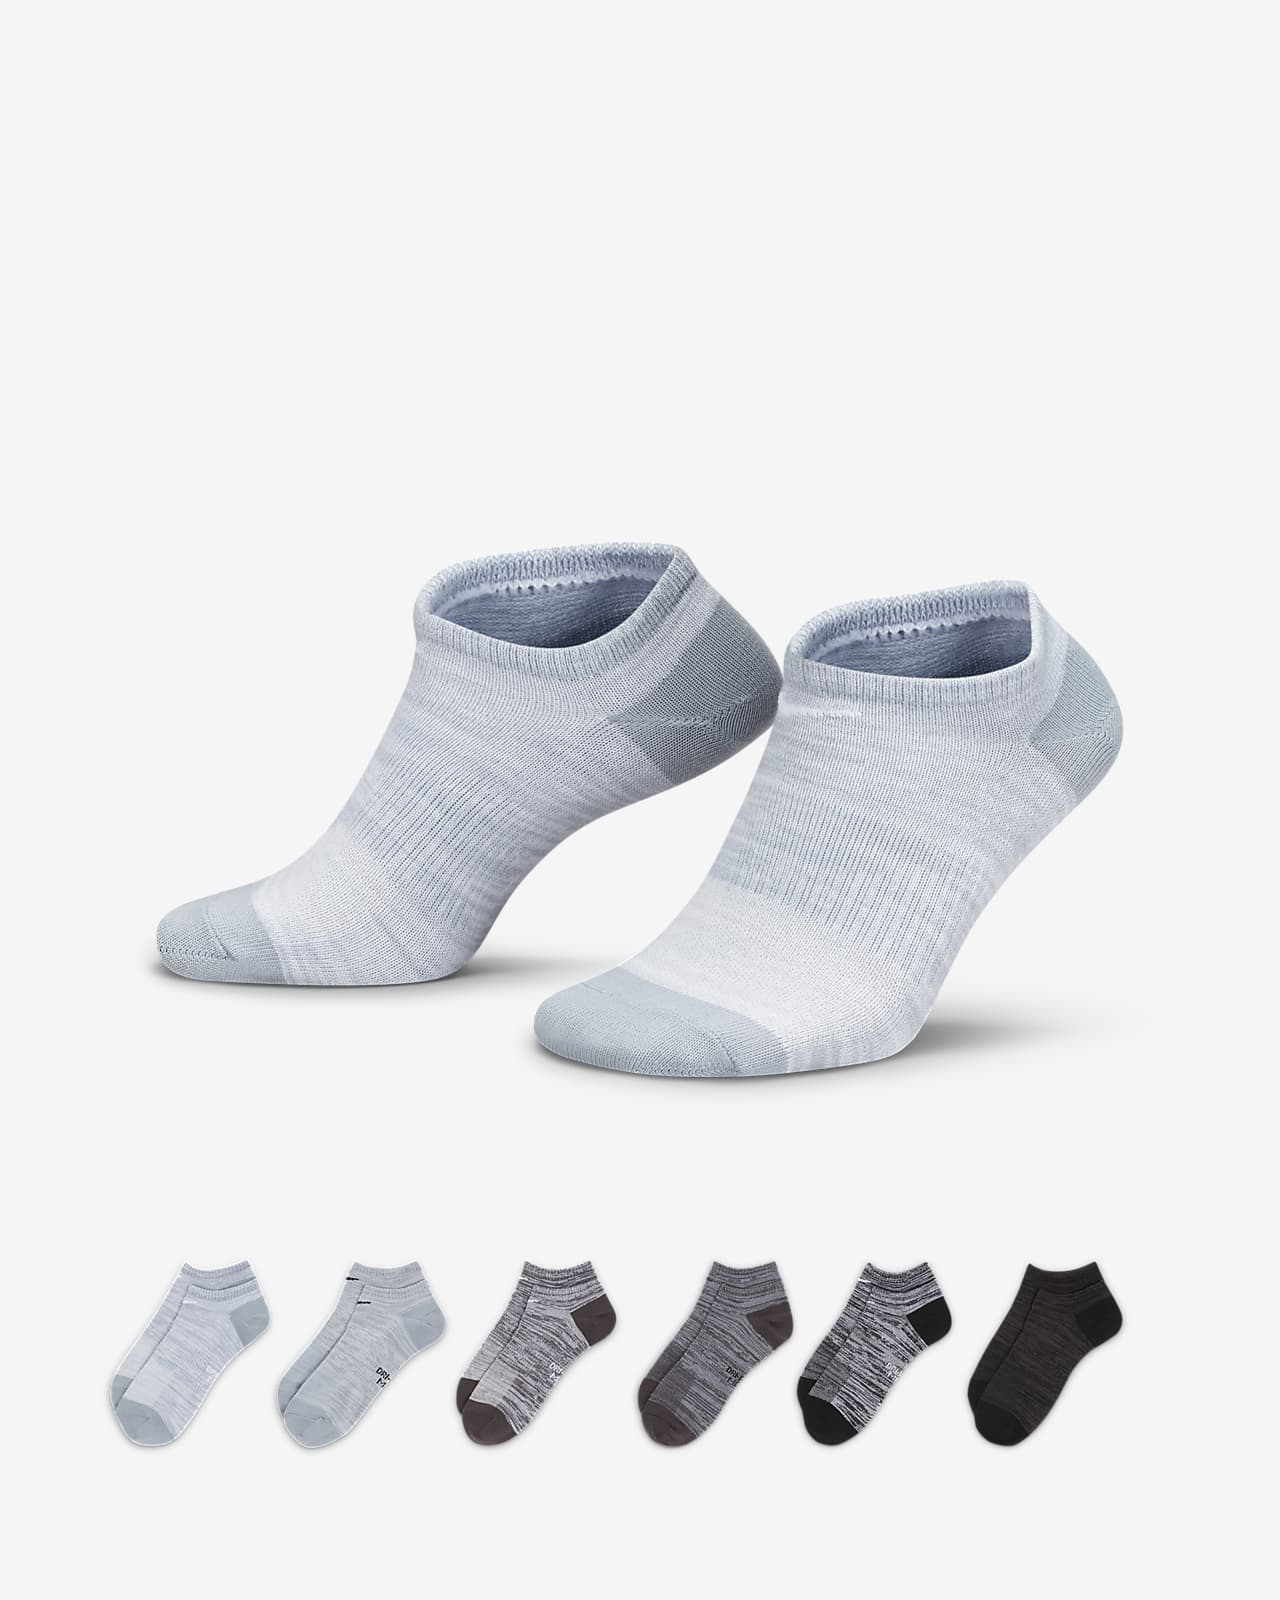 Nike Everyday Lightweight No-Show Training Socks (6 Pairs)